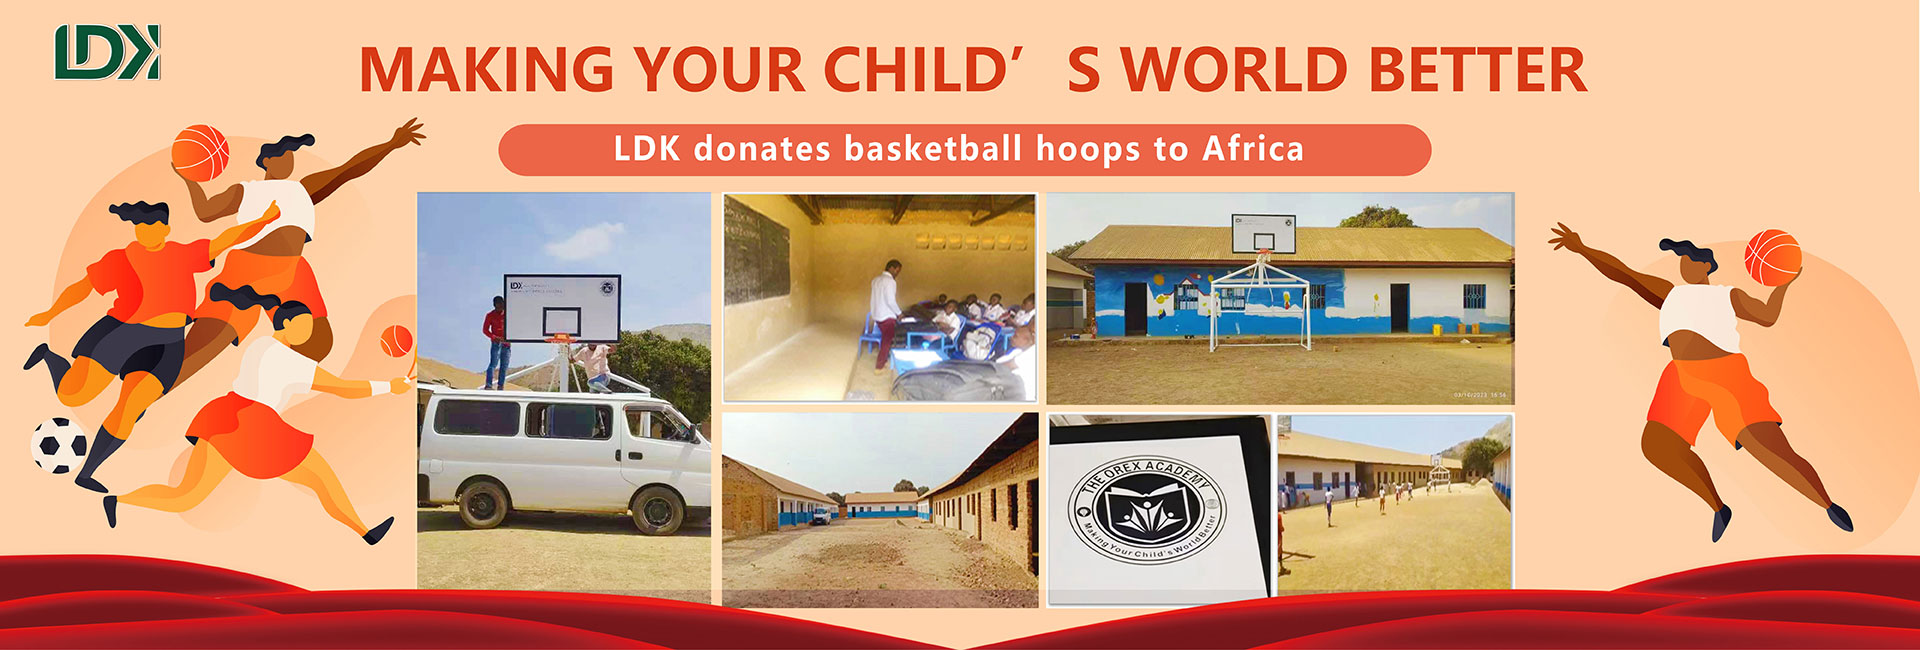 LDK Sports Equipment Charity Poster